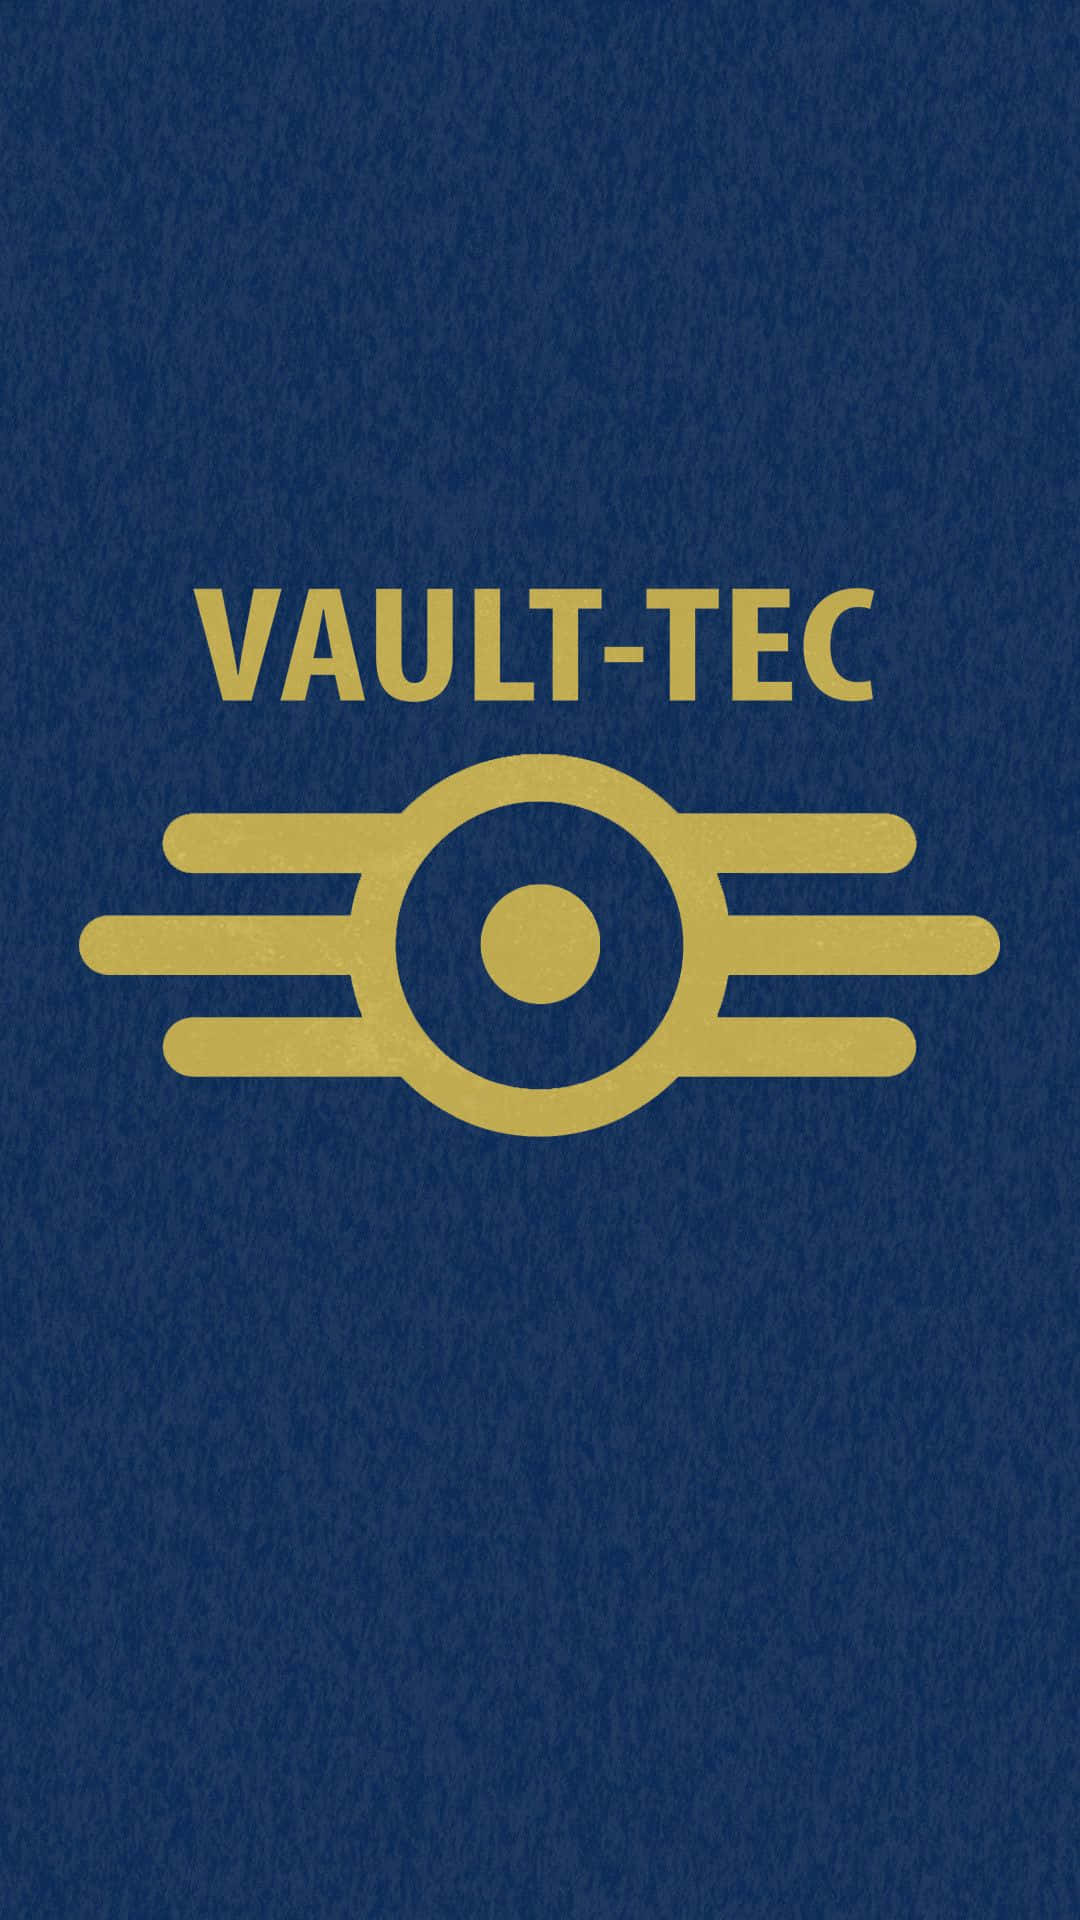 Vault-Tec Logo on a Blue Background Wallpaper